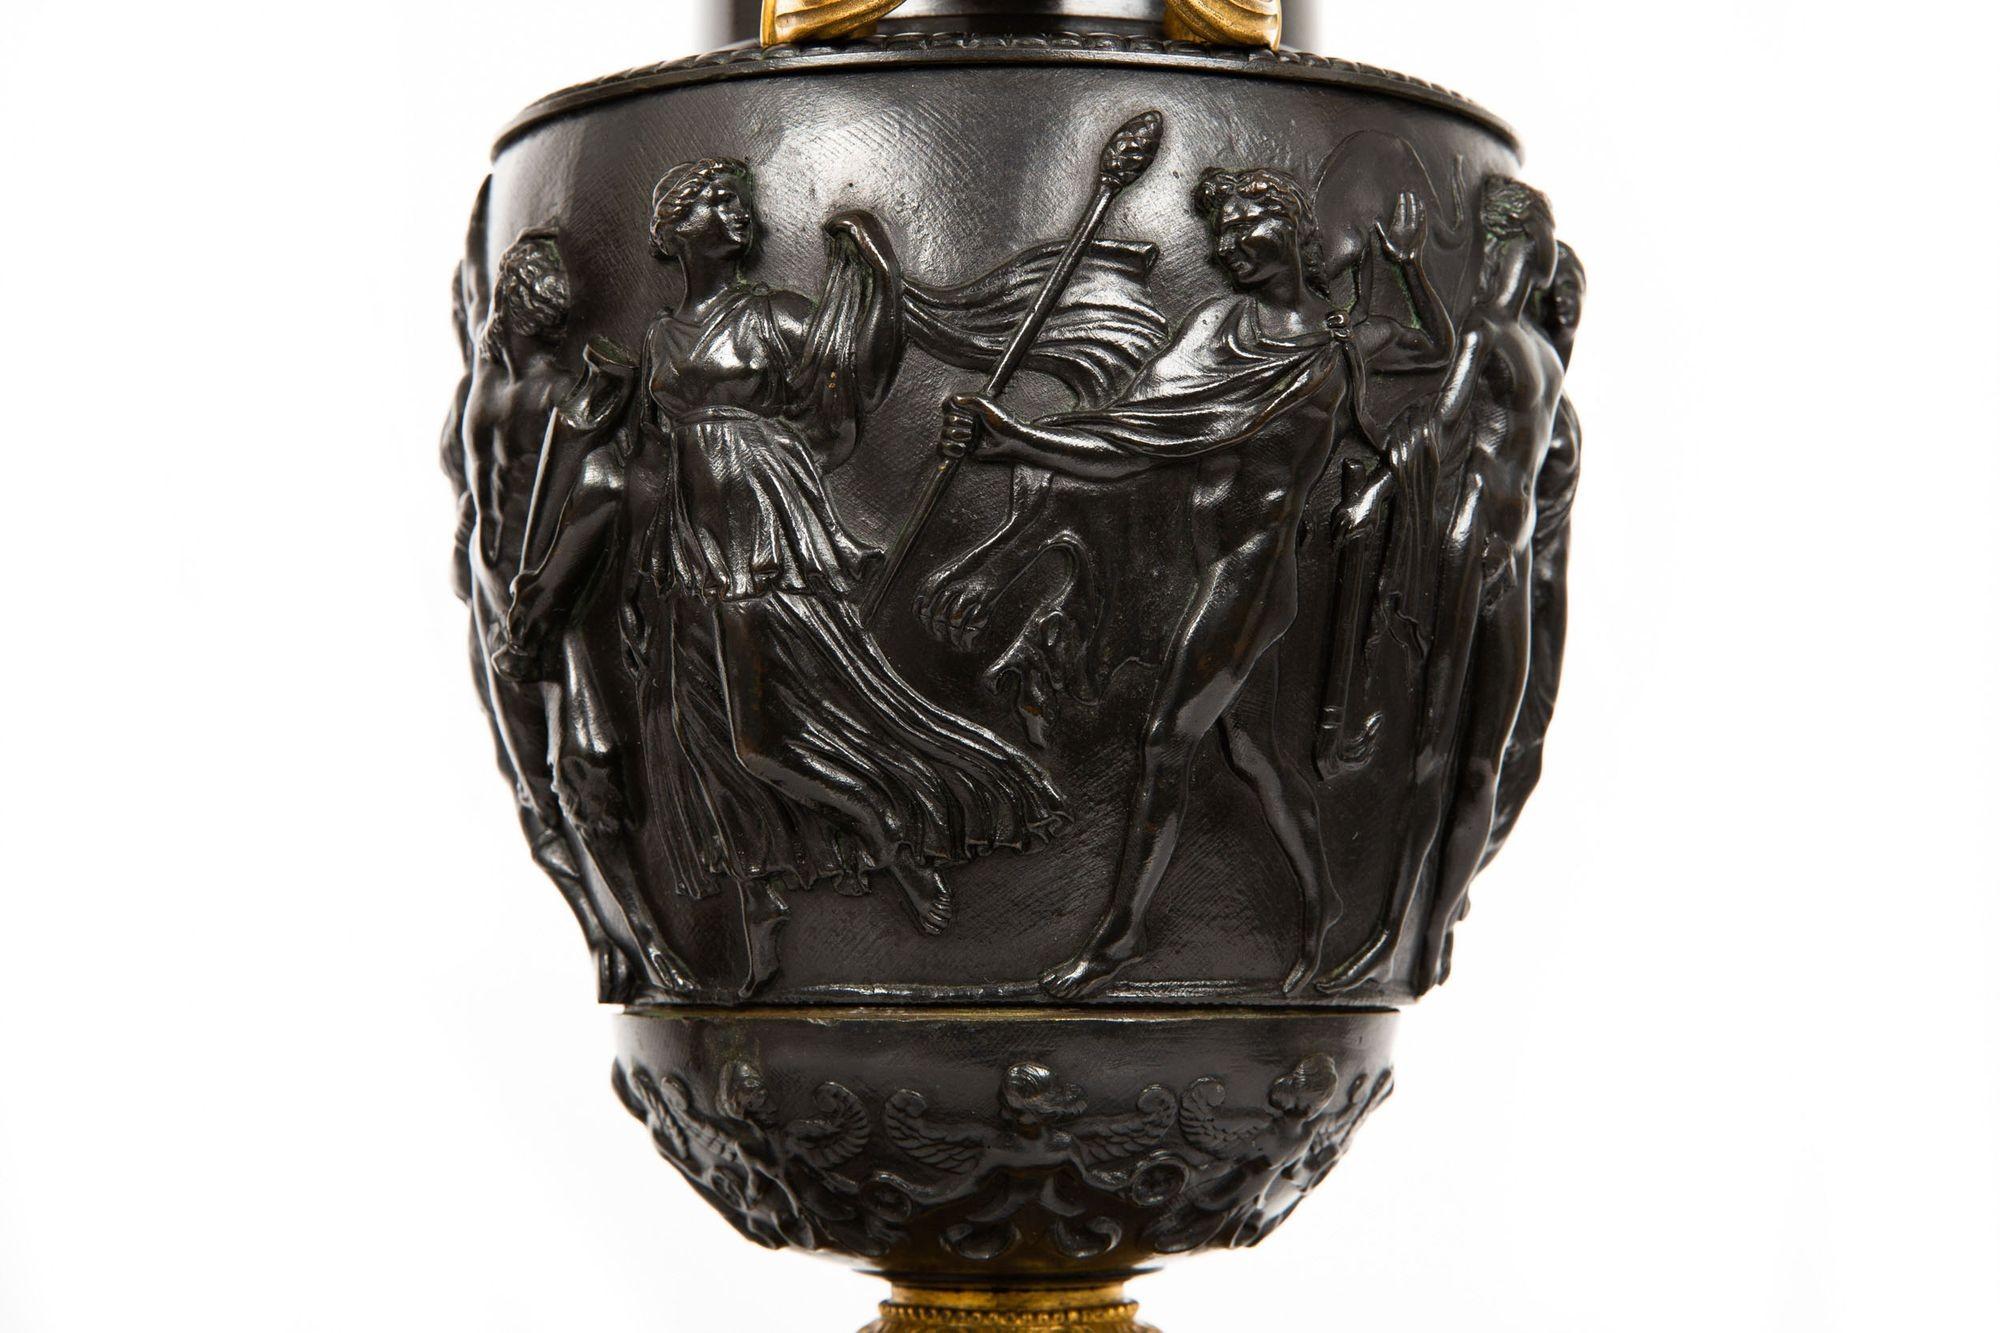 Grand Tour Antique Patinated Bronze “Townley” Vases Urns circa 1870, a Pair 2